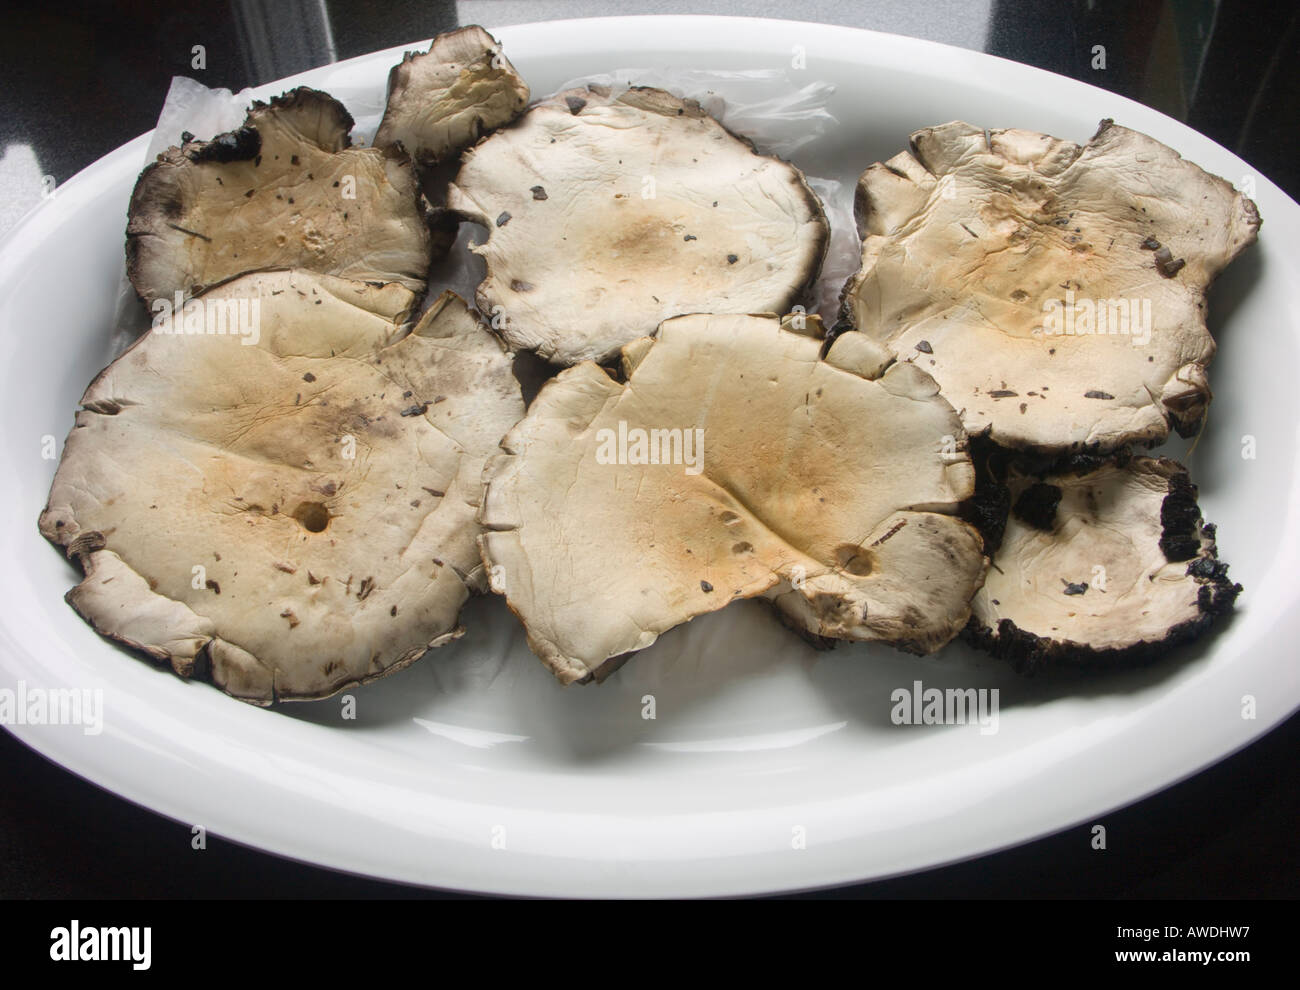 Fresh field mushrooms on a plate Stock Photo